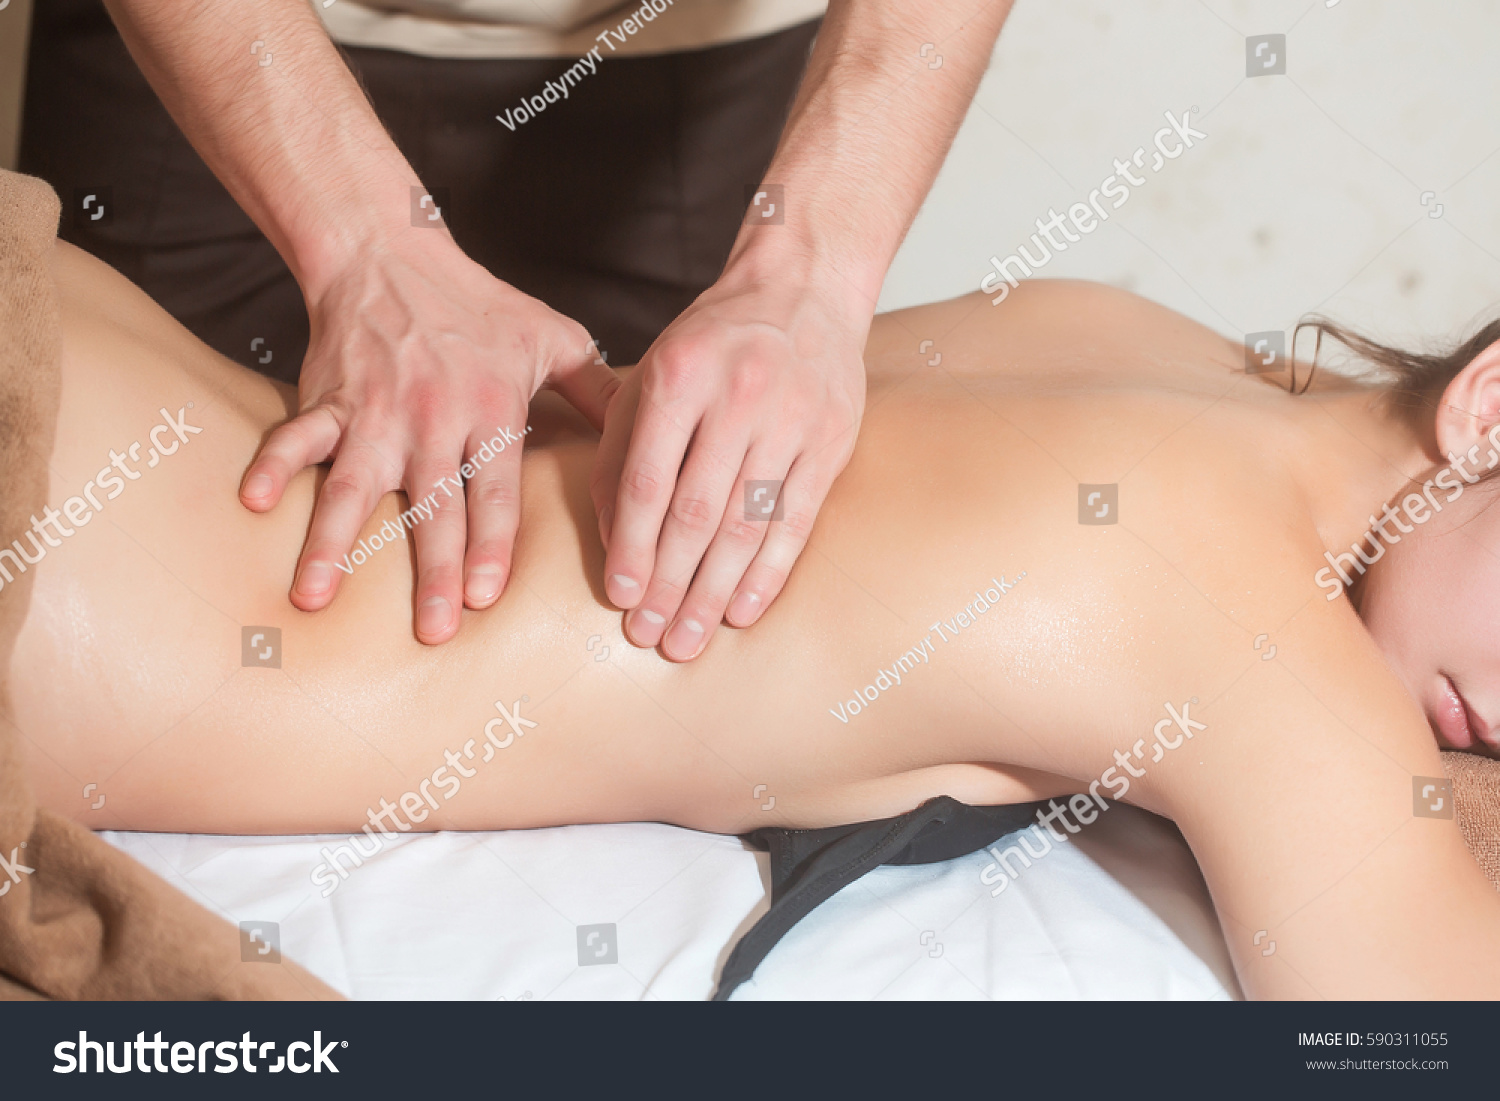 Intense massage makes